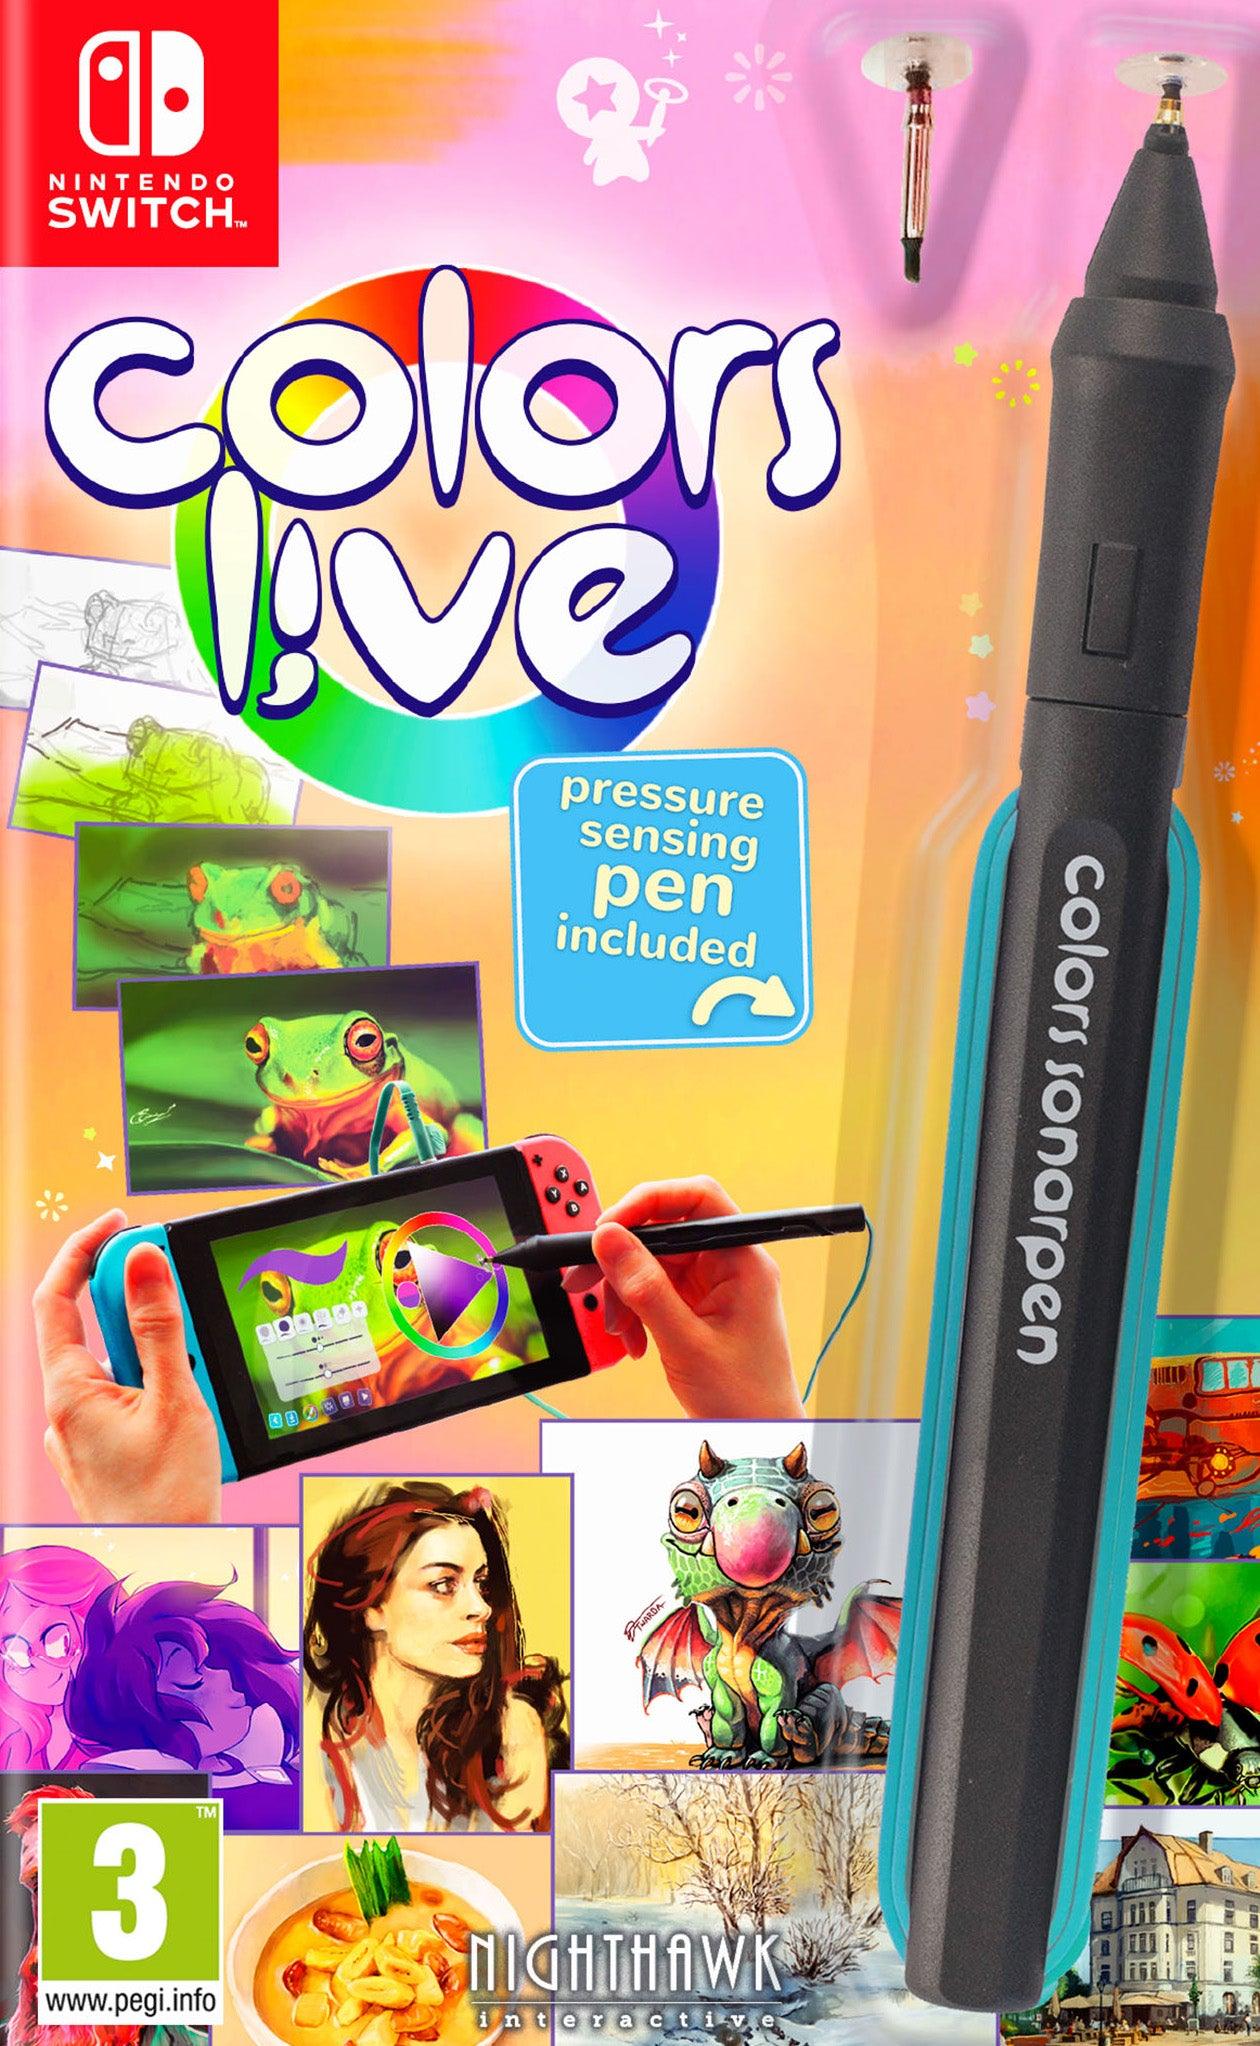 Colours Live - Want a New Gadget